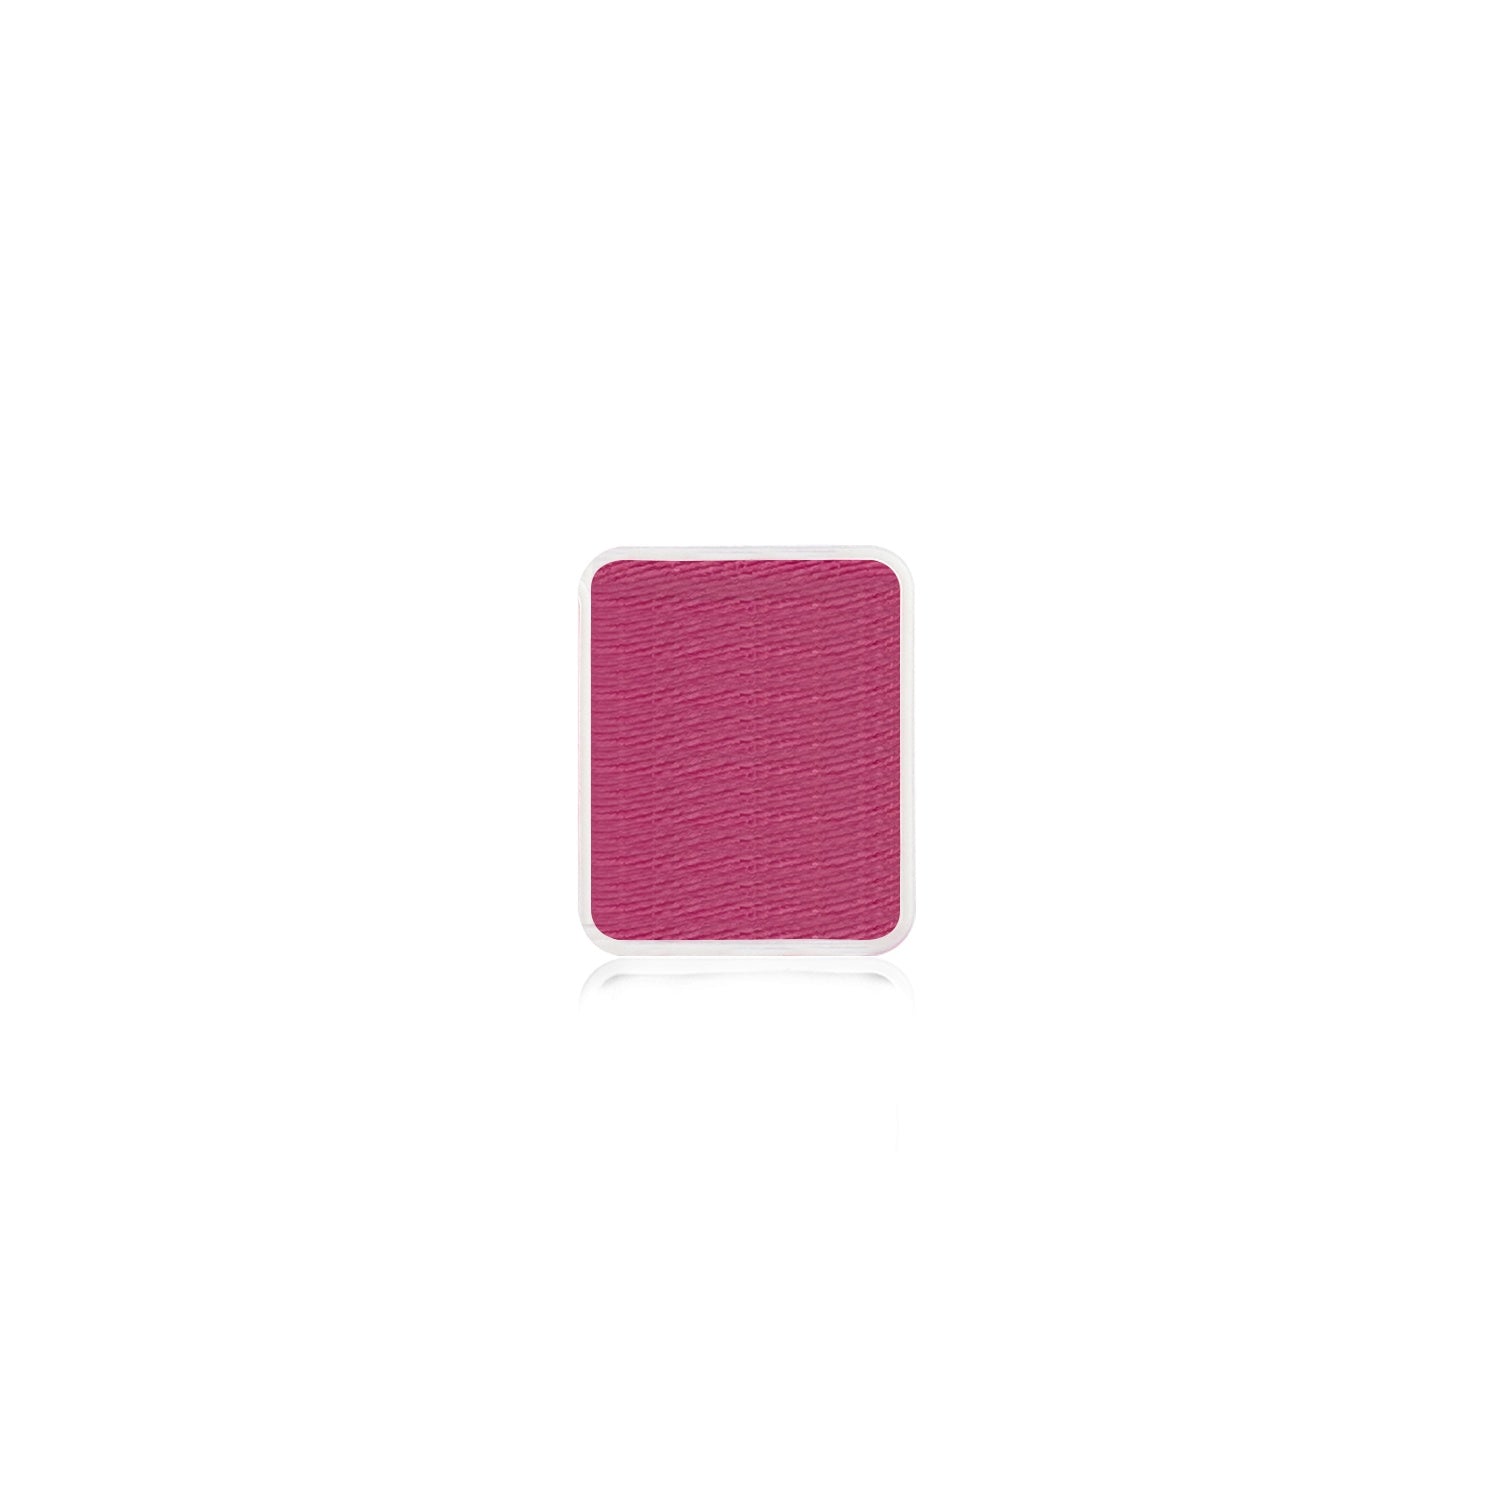 Kraze FX Face Paint Refill - Coral Pink (6 gm)